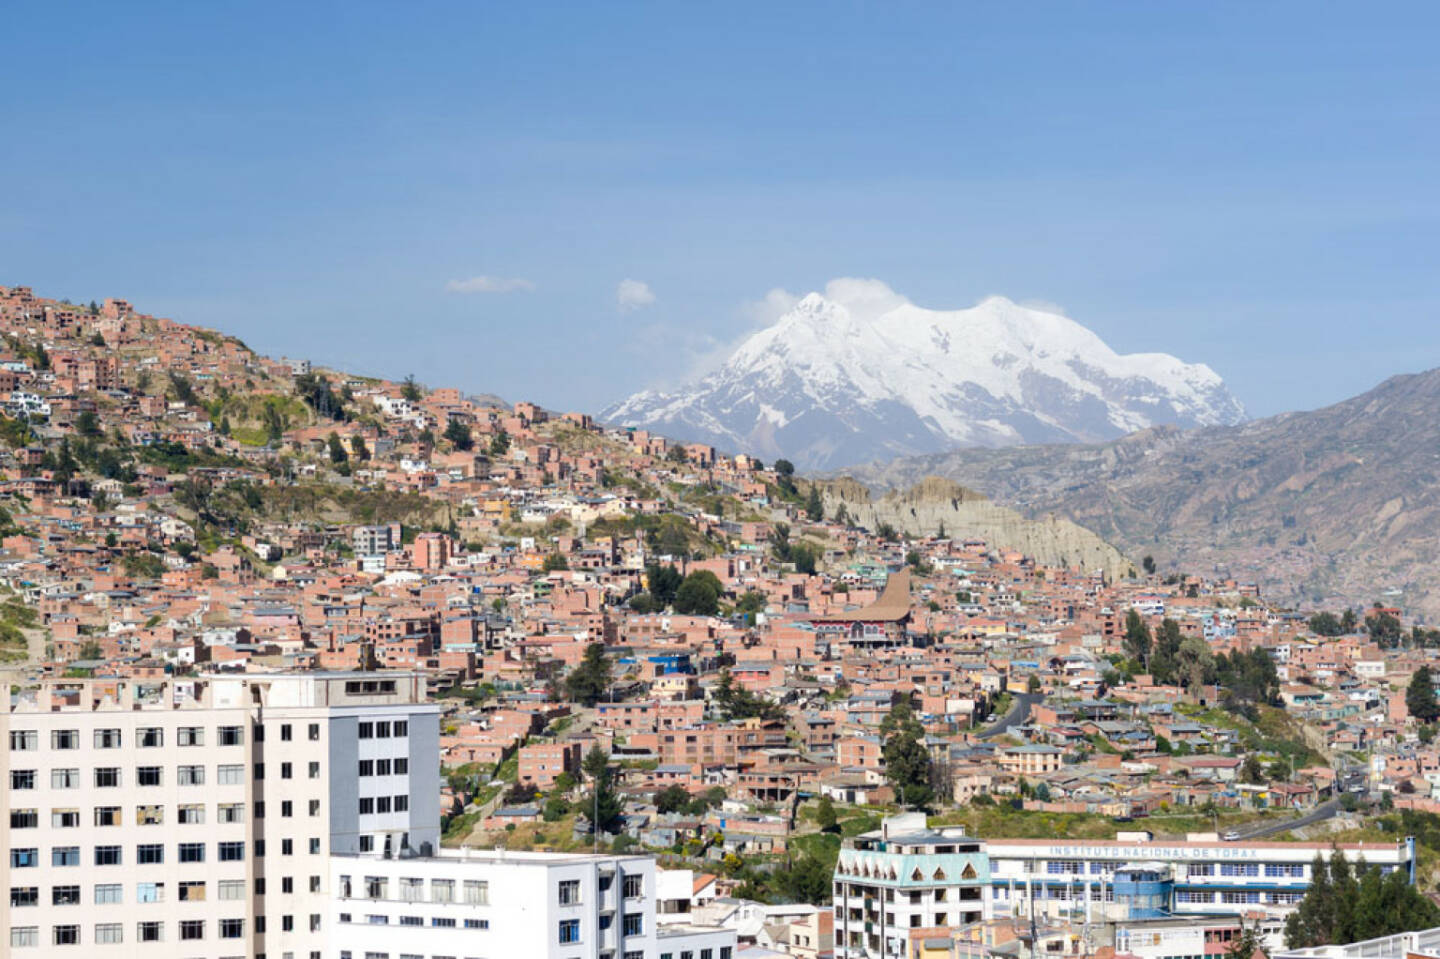 La Paz, Bolivien, http://www.shutterstock.com/de/pic-110991587/stock-photo-this-image-shows-la-paz-bolivia.html